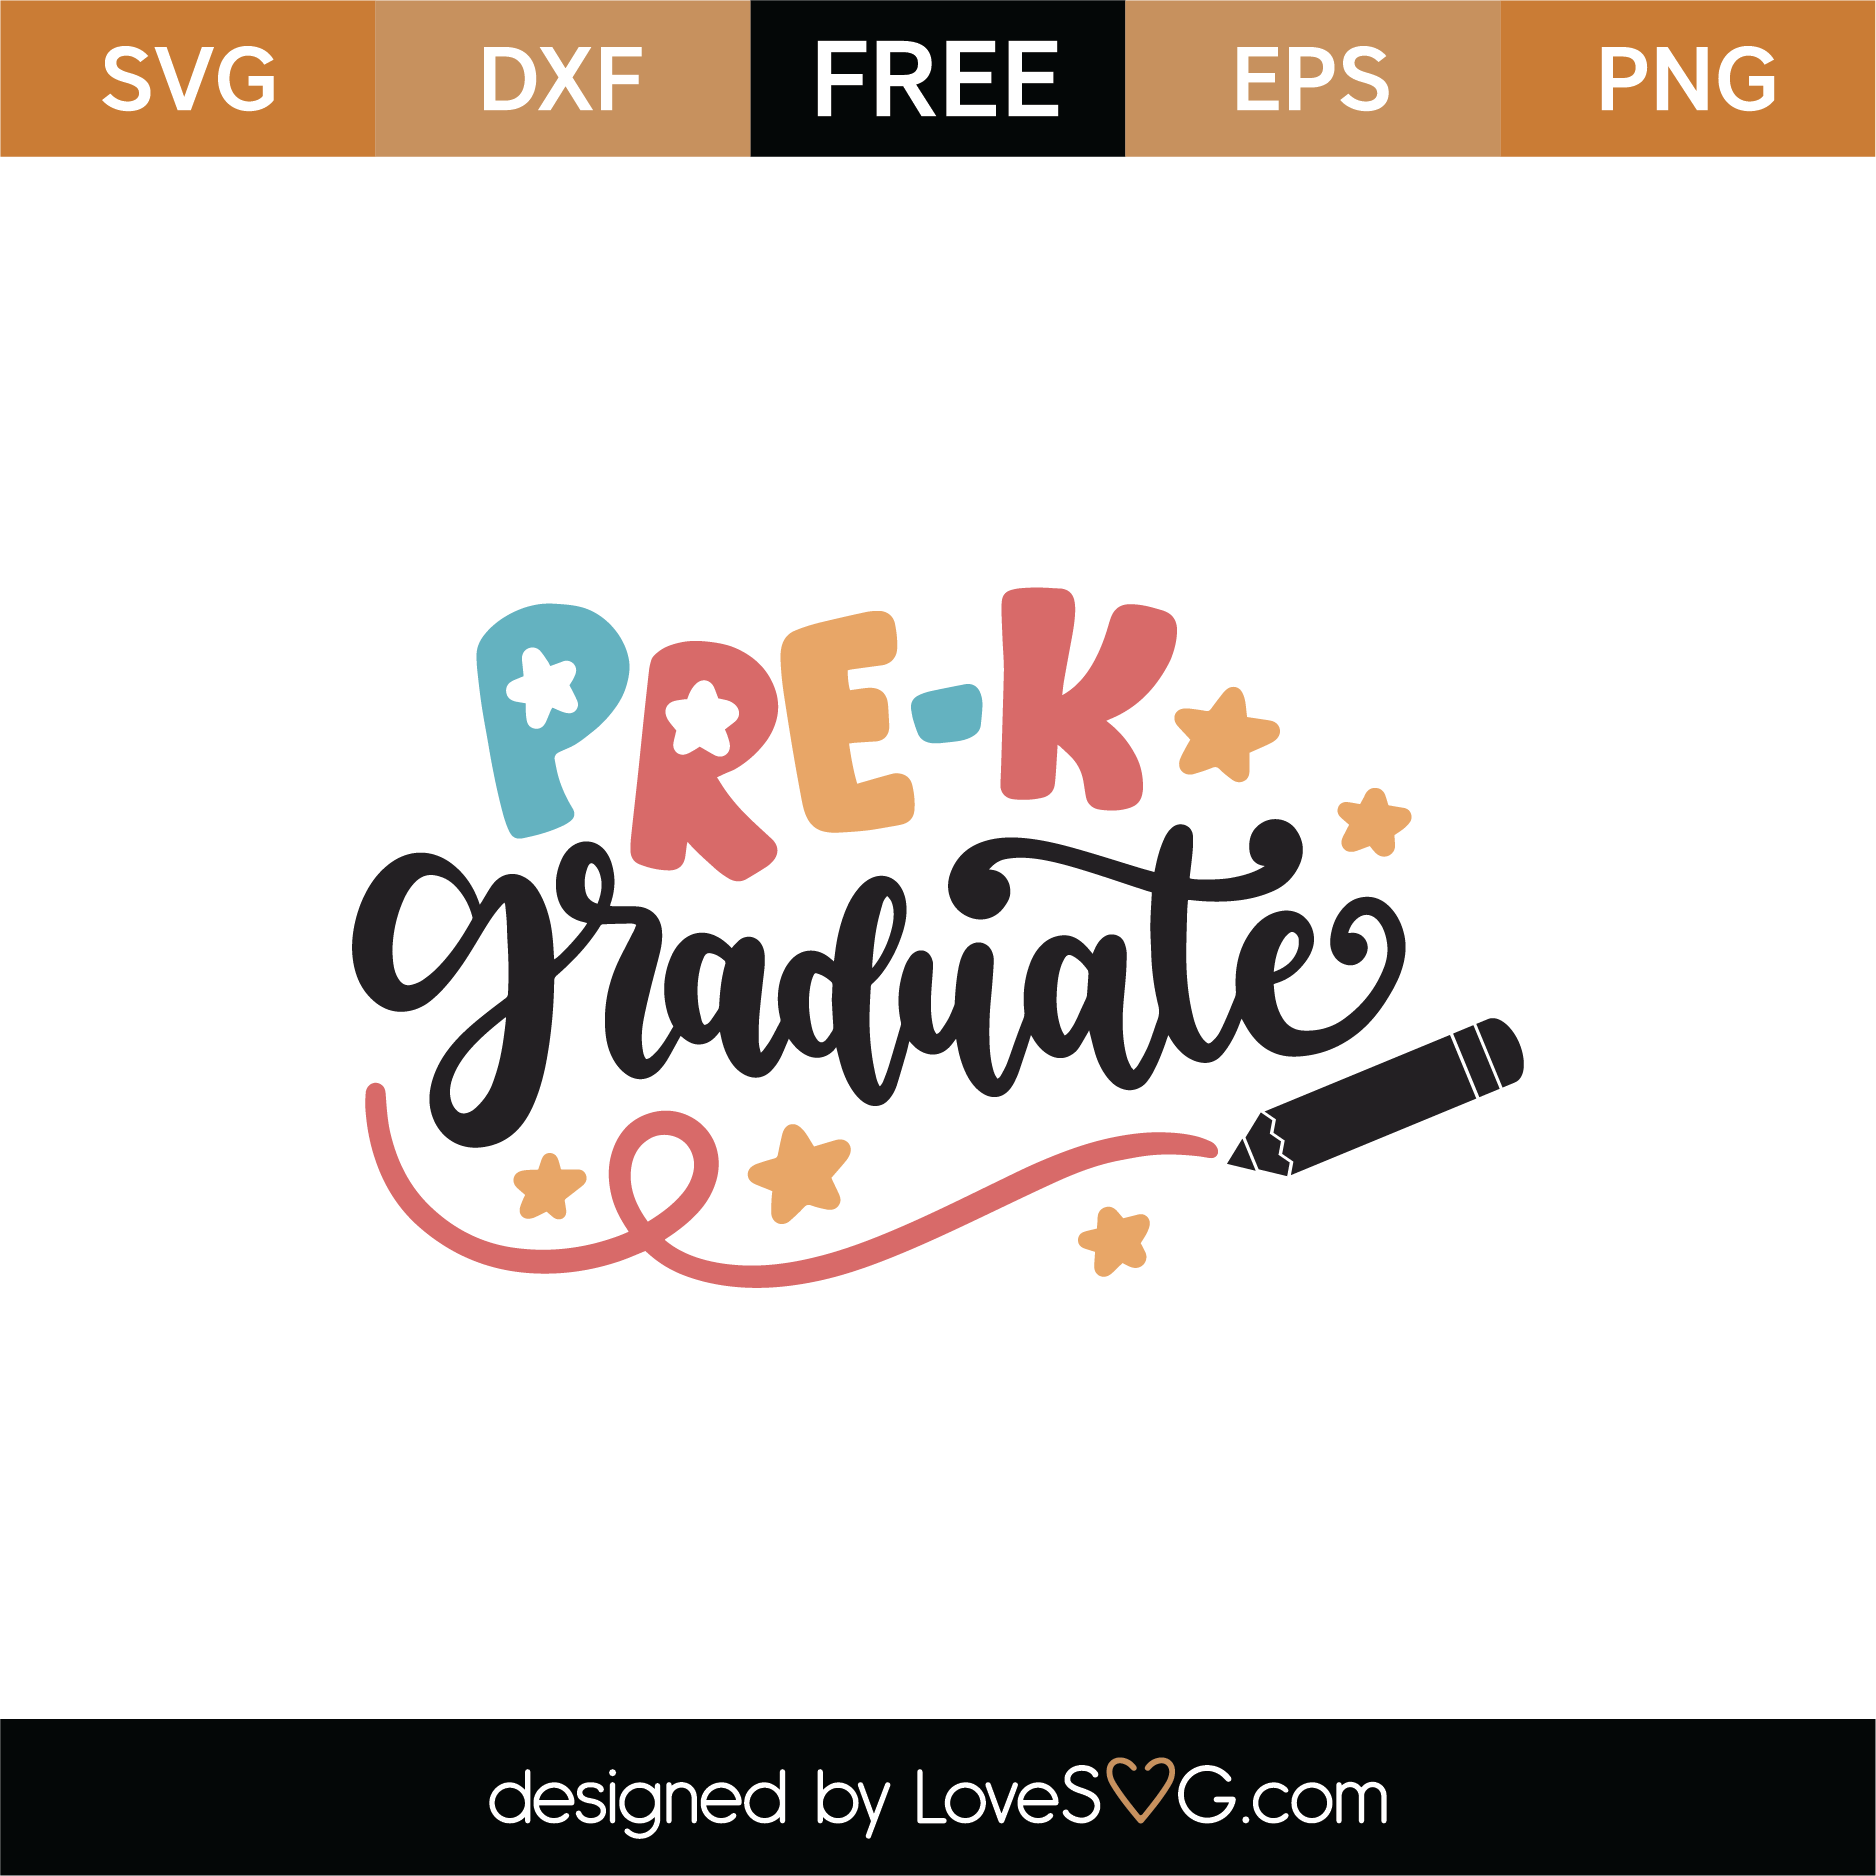 Download Free Pre-K Graduate SVG Cut File | Lovesvg.com